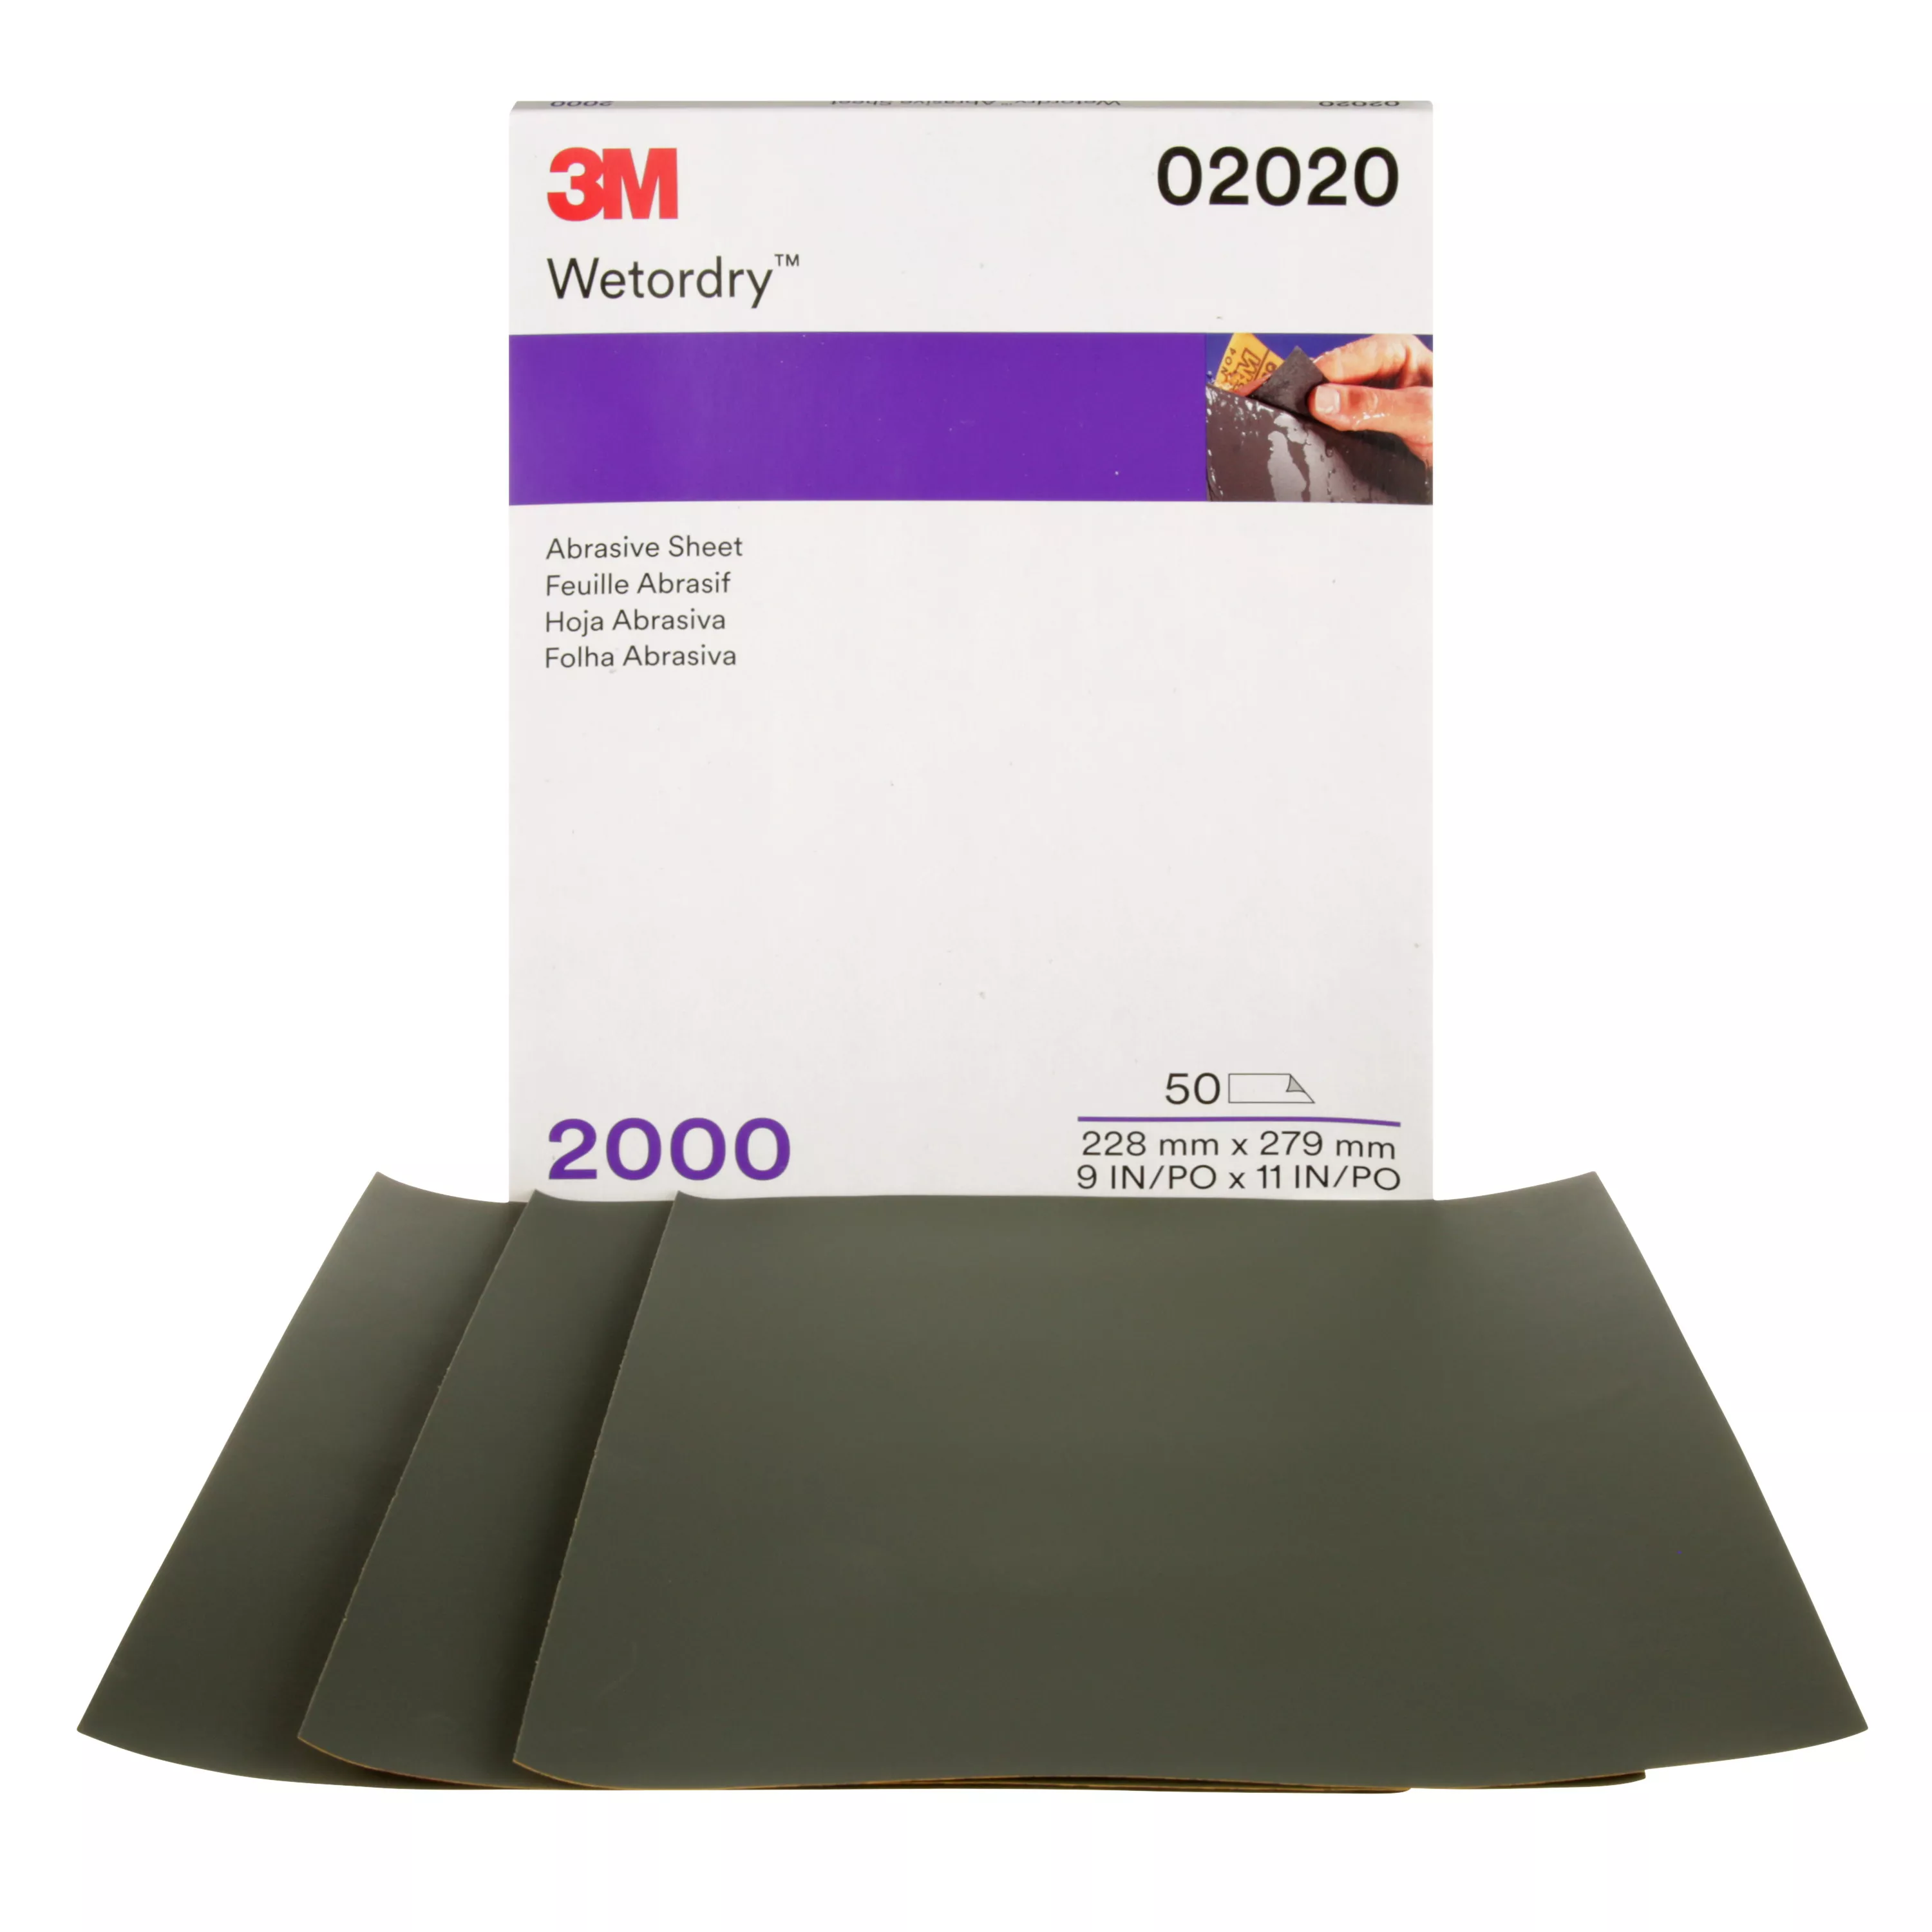 3M™ Wetordry™ Abrasive Sheet, 02020, 2000, 9 in x 11 in, 50 sheets per
carton, 5 cartons per case